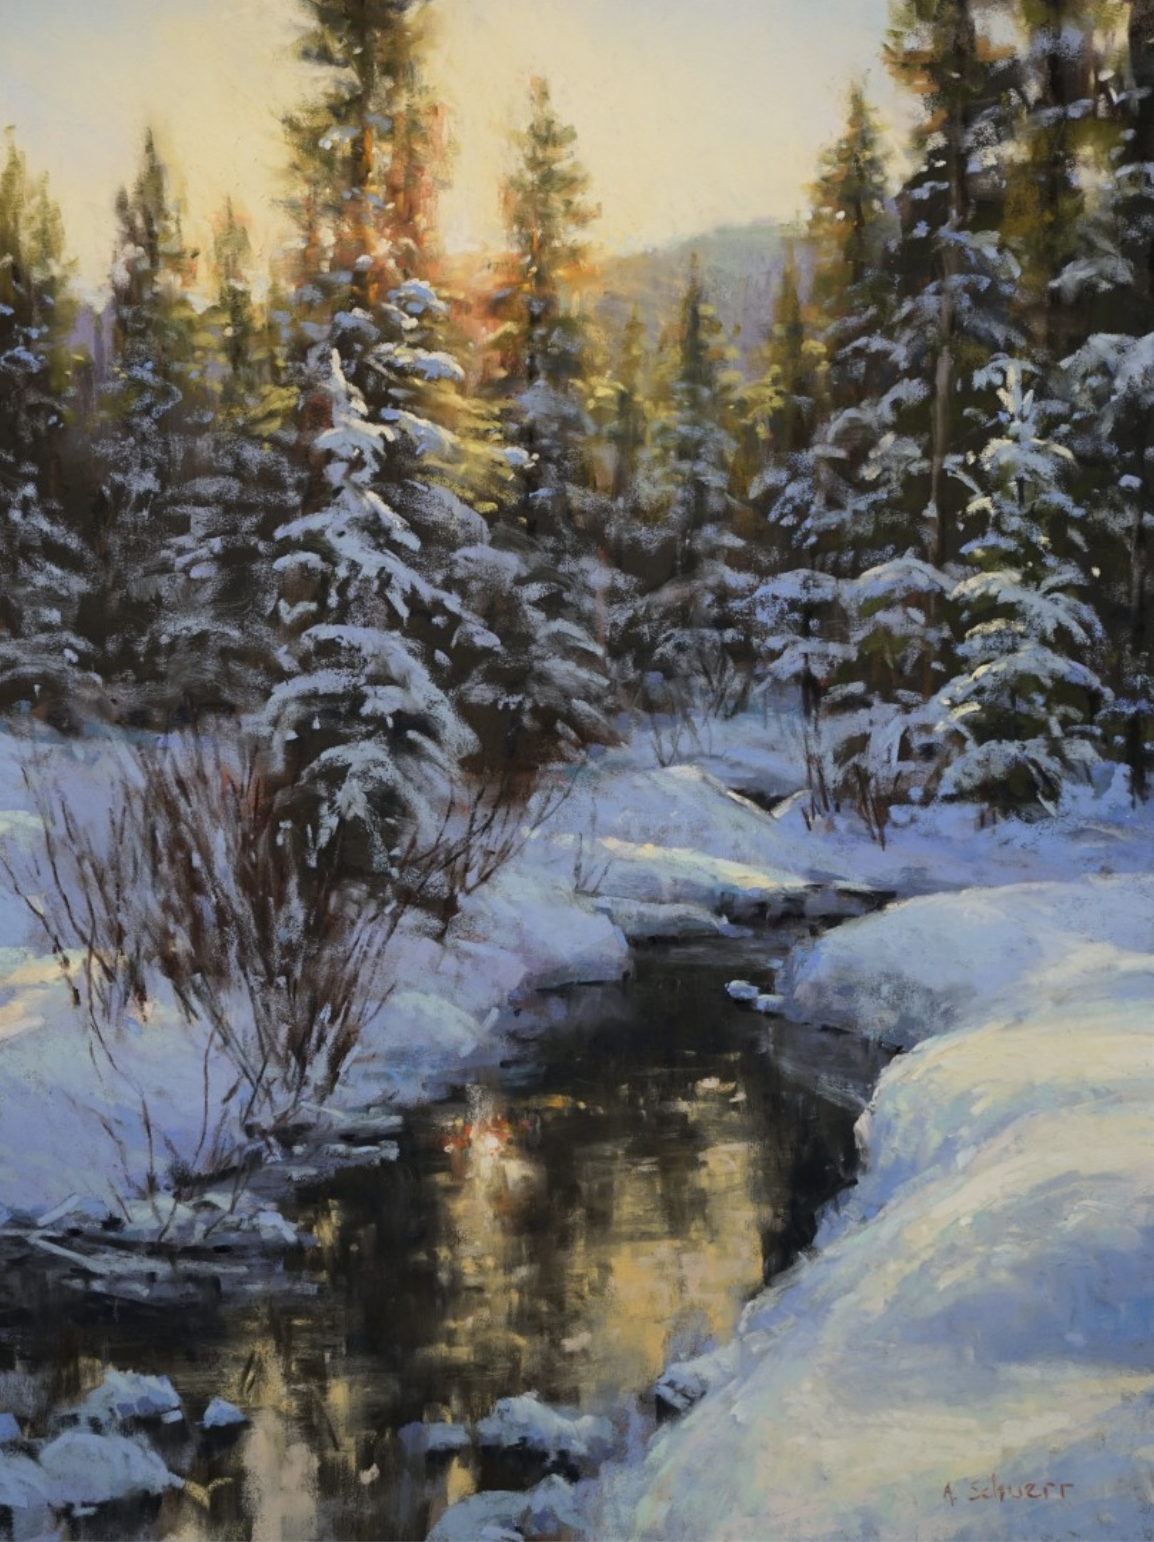 Painting snow - Aaron Schuerr, "January Reflections," pastel, no size given. HM Dakota Art Pastels Q4 Established Artist category